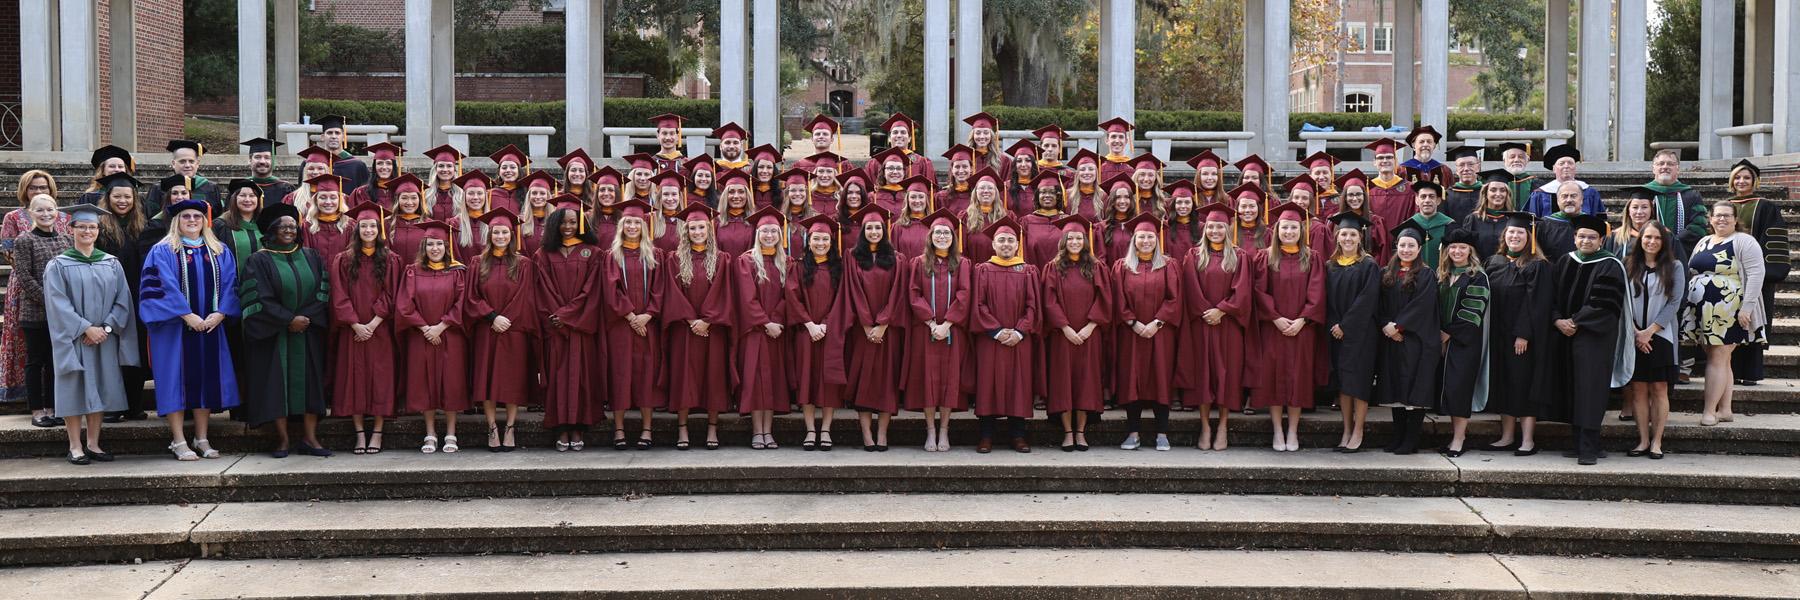 Class of 2023 Graduation